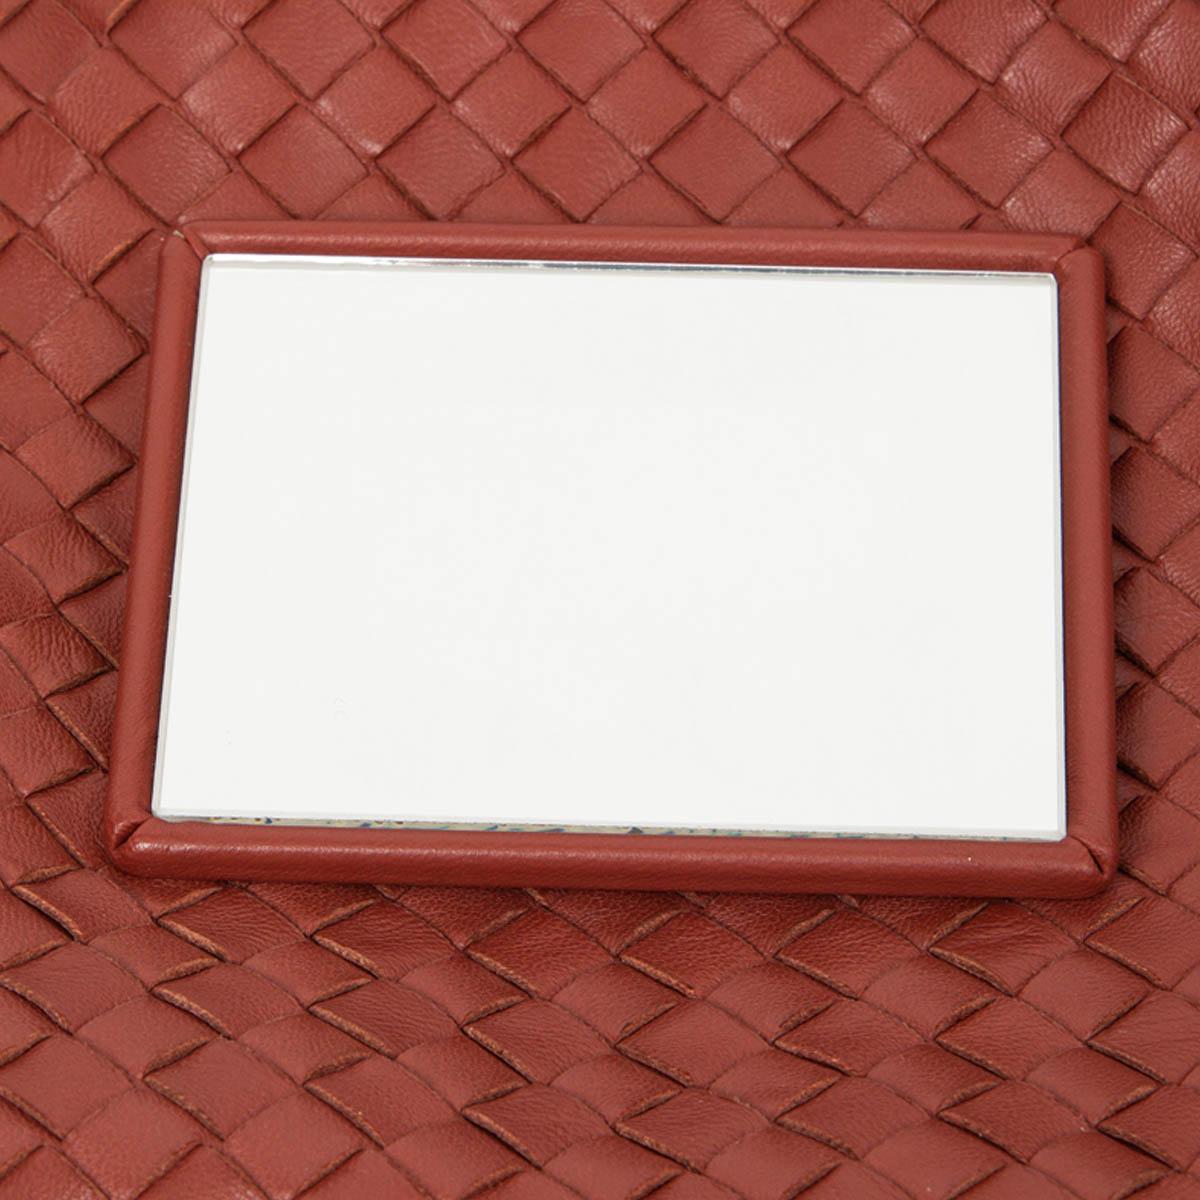 BOTTEGA VENETA brick red leather INTRECCIATO VENETA LARGE Shoulder Bag 3